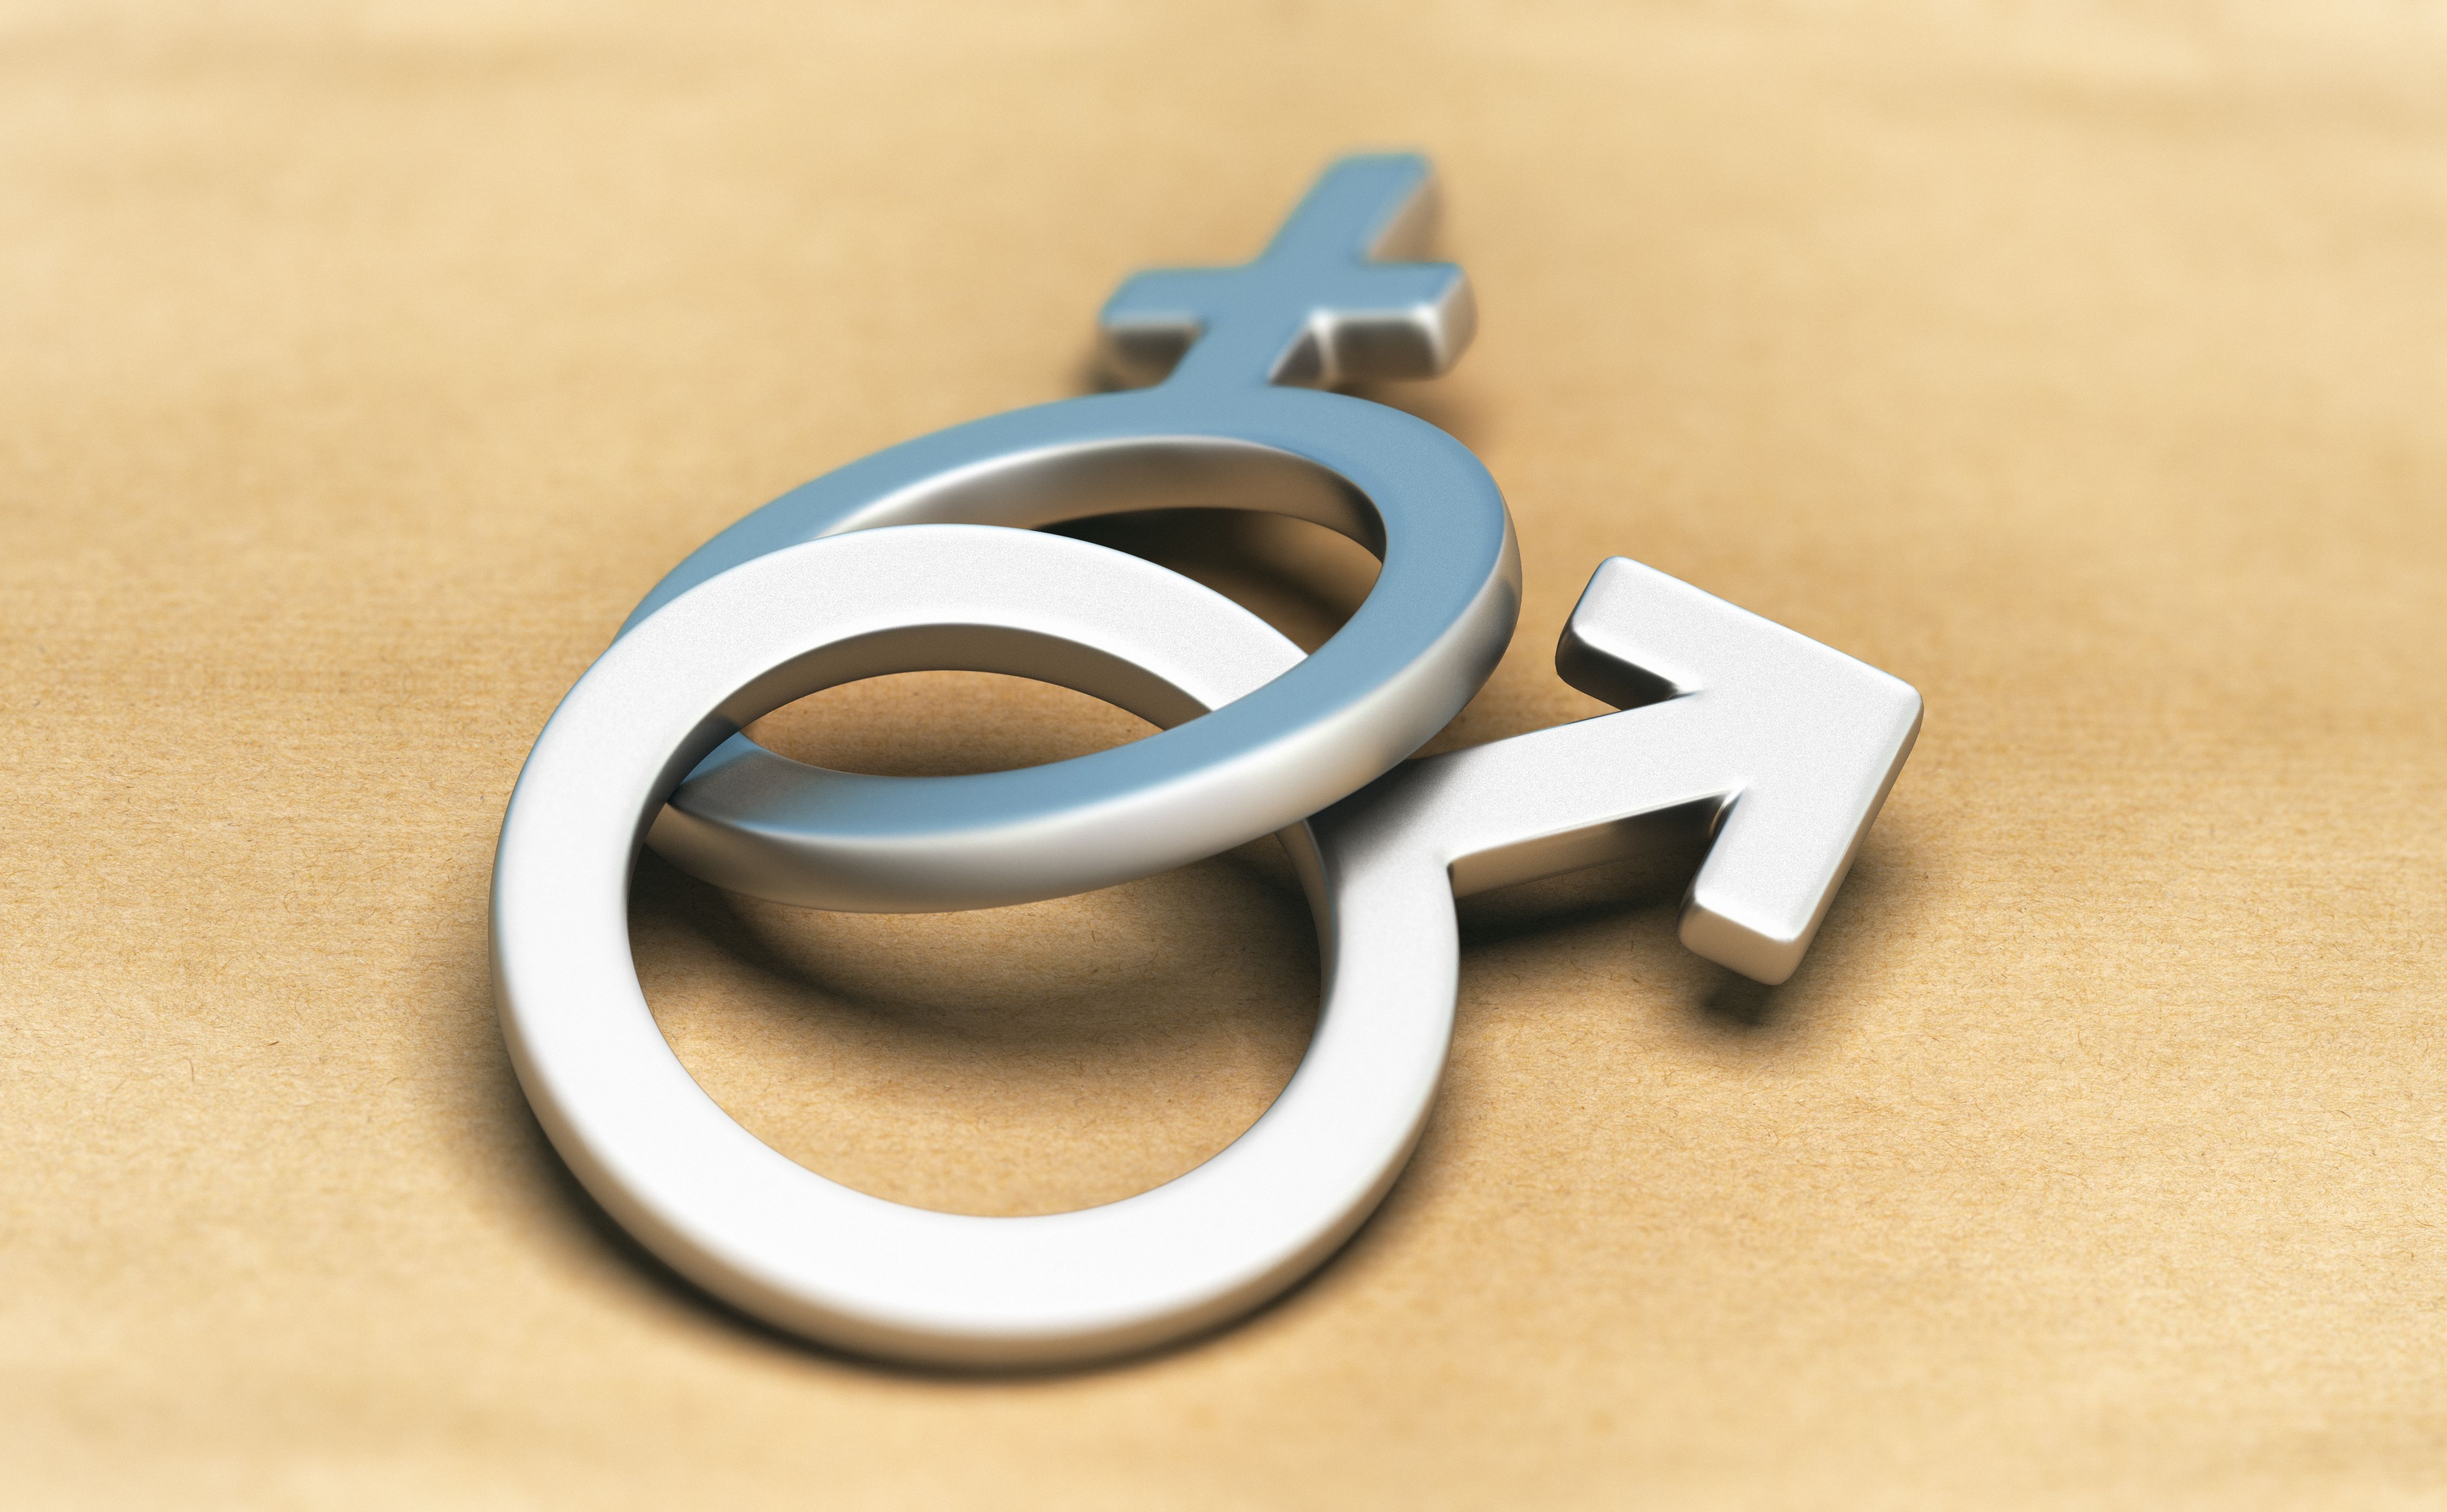 gender-symbols-male-and-female-together-2021-08-30-02-12-48-utc.jpg